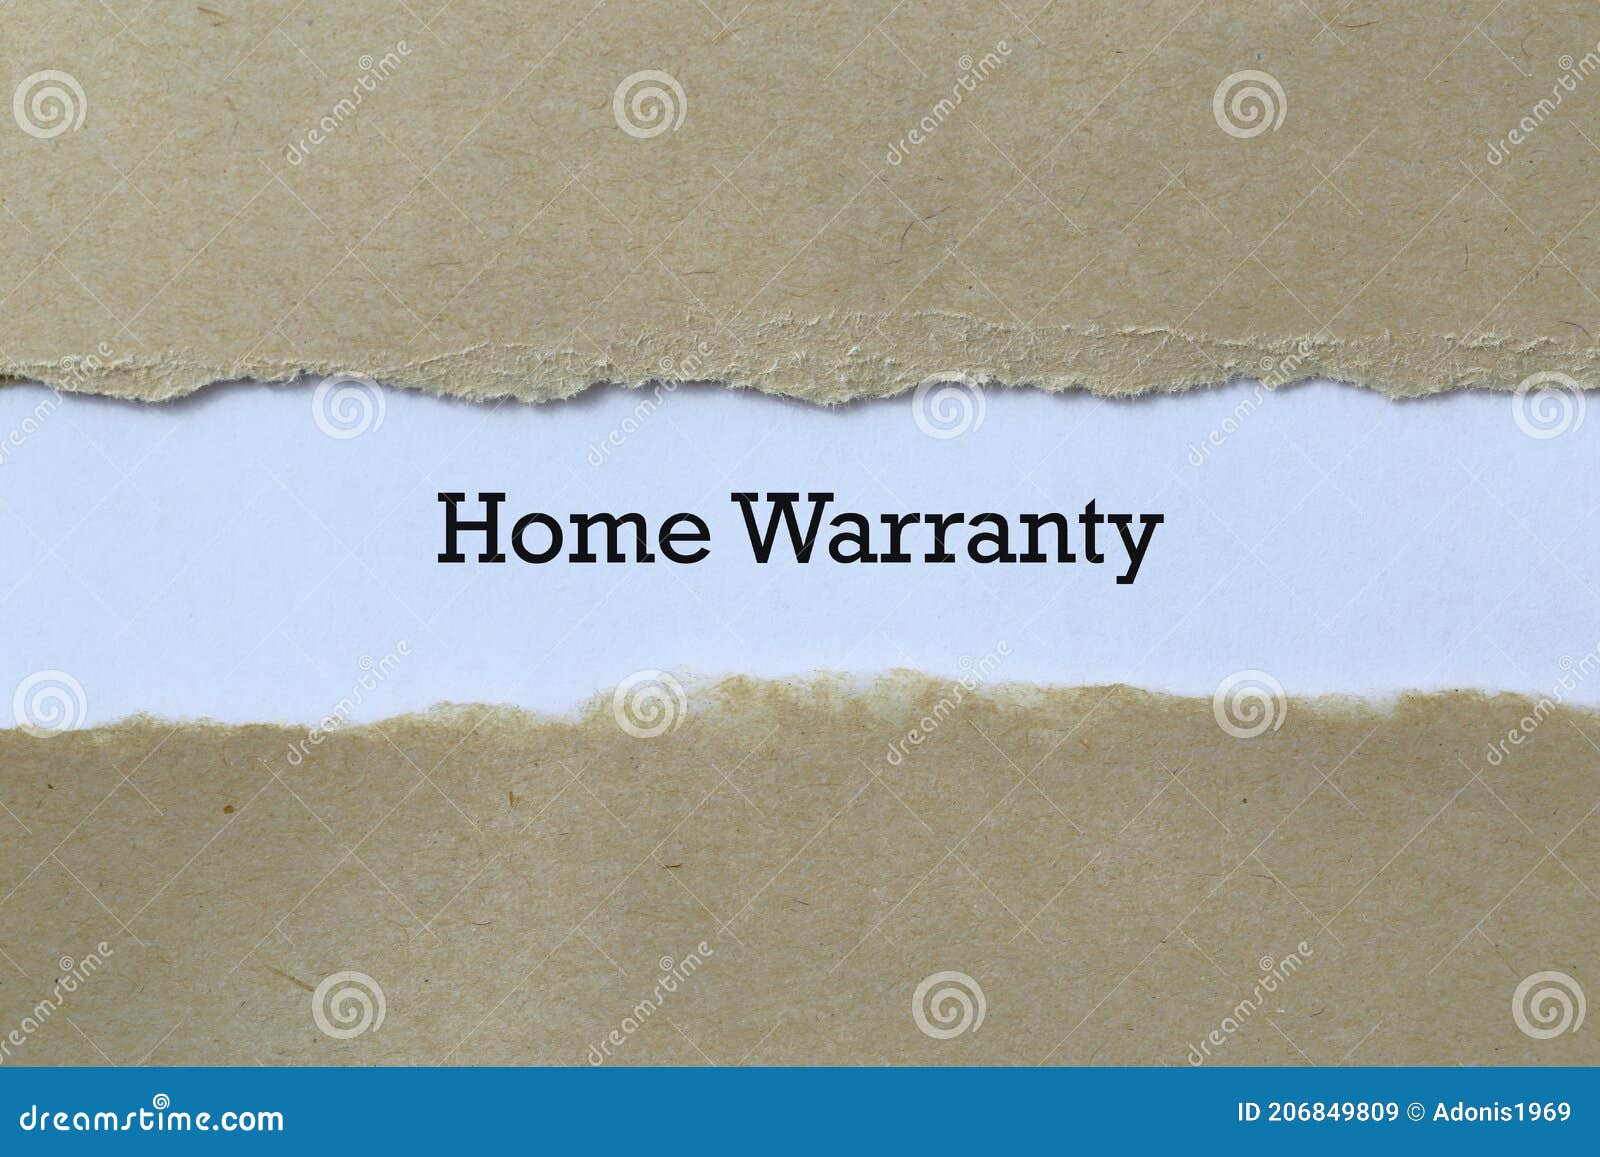 home warranty on paper